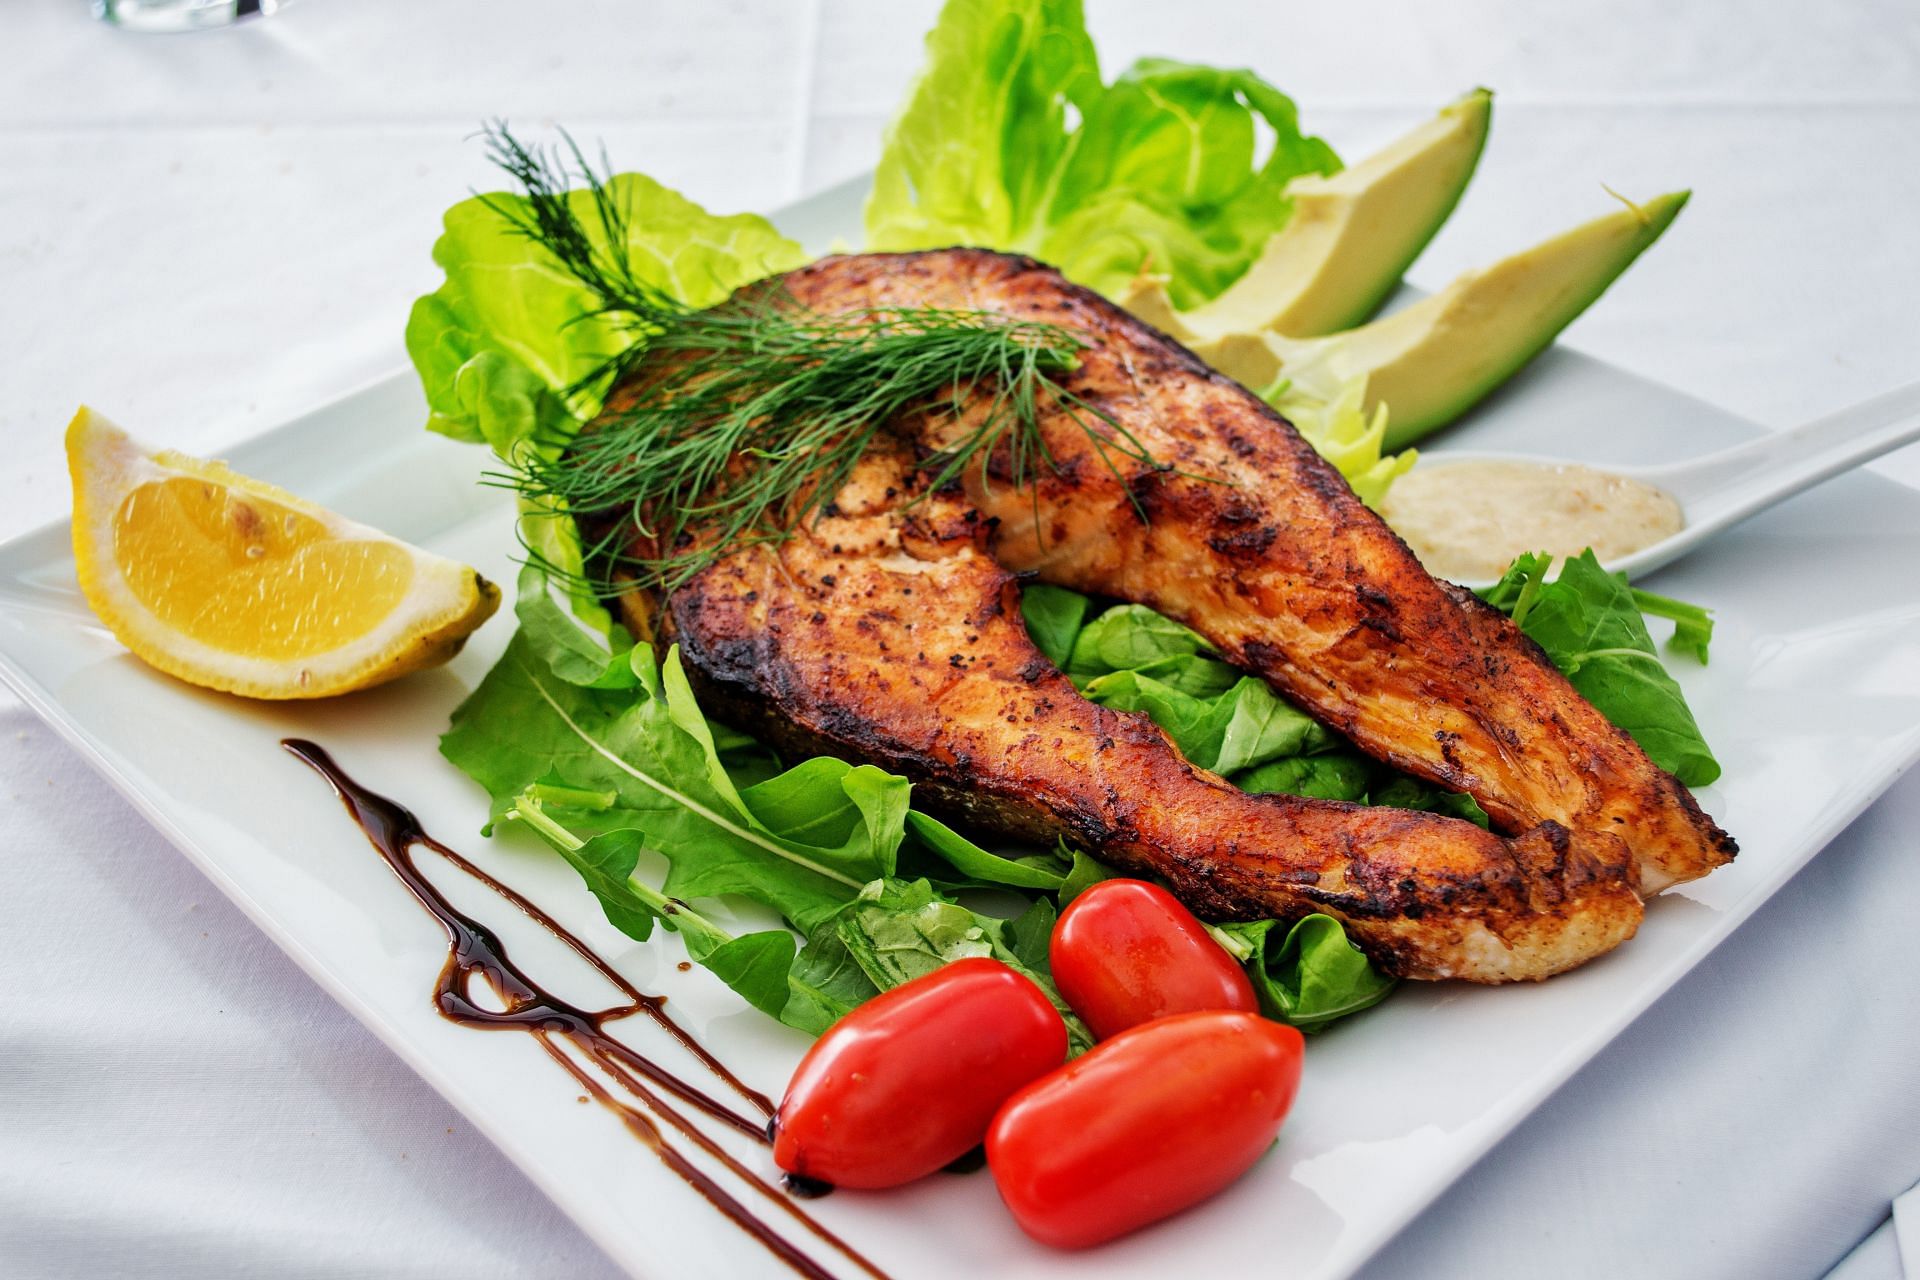 Eating fish may benefit mental health due to omega-3 fatty acids (Image via Pexels)